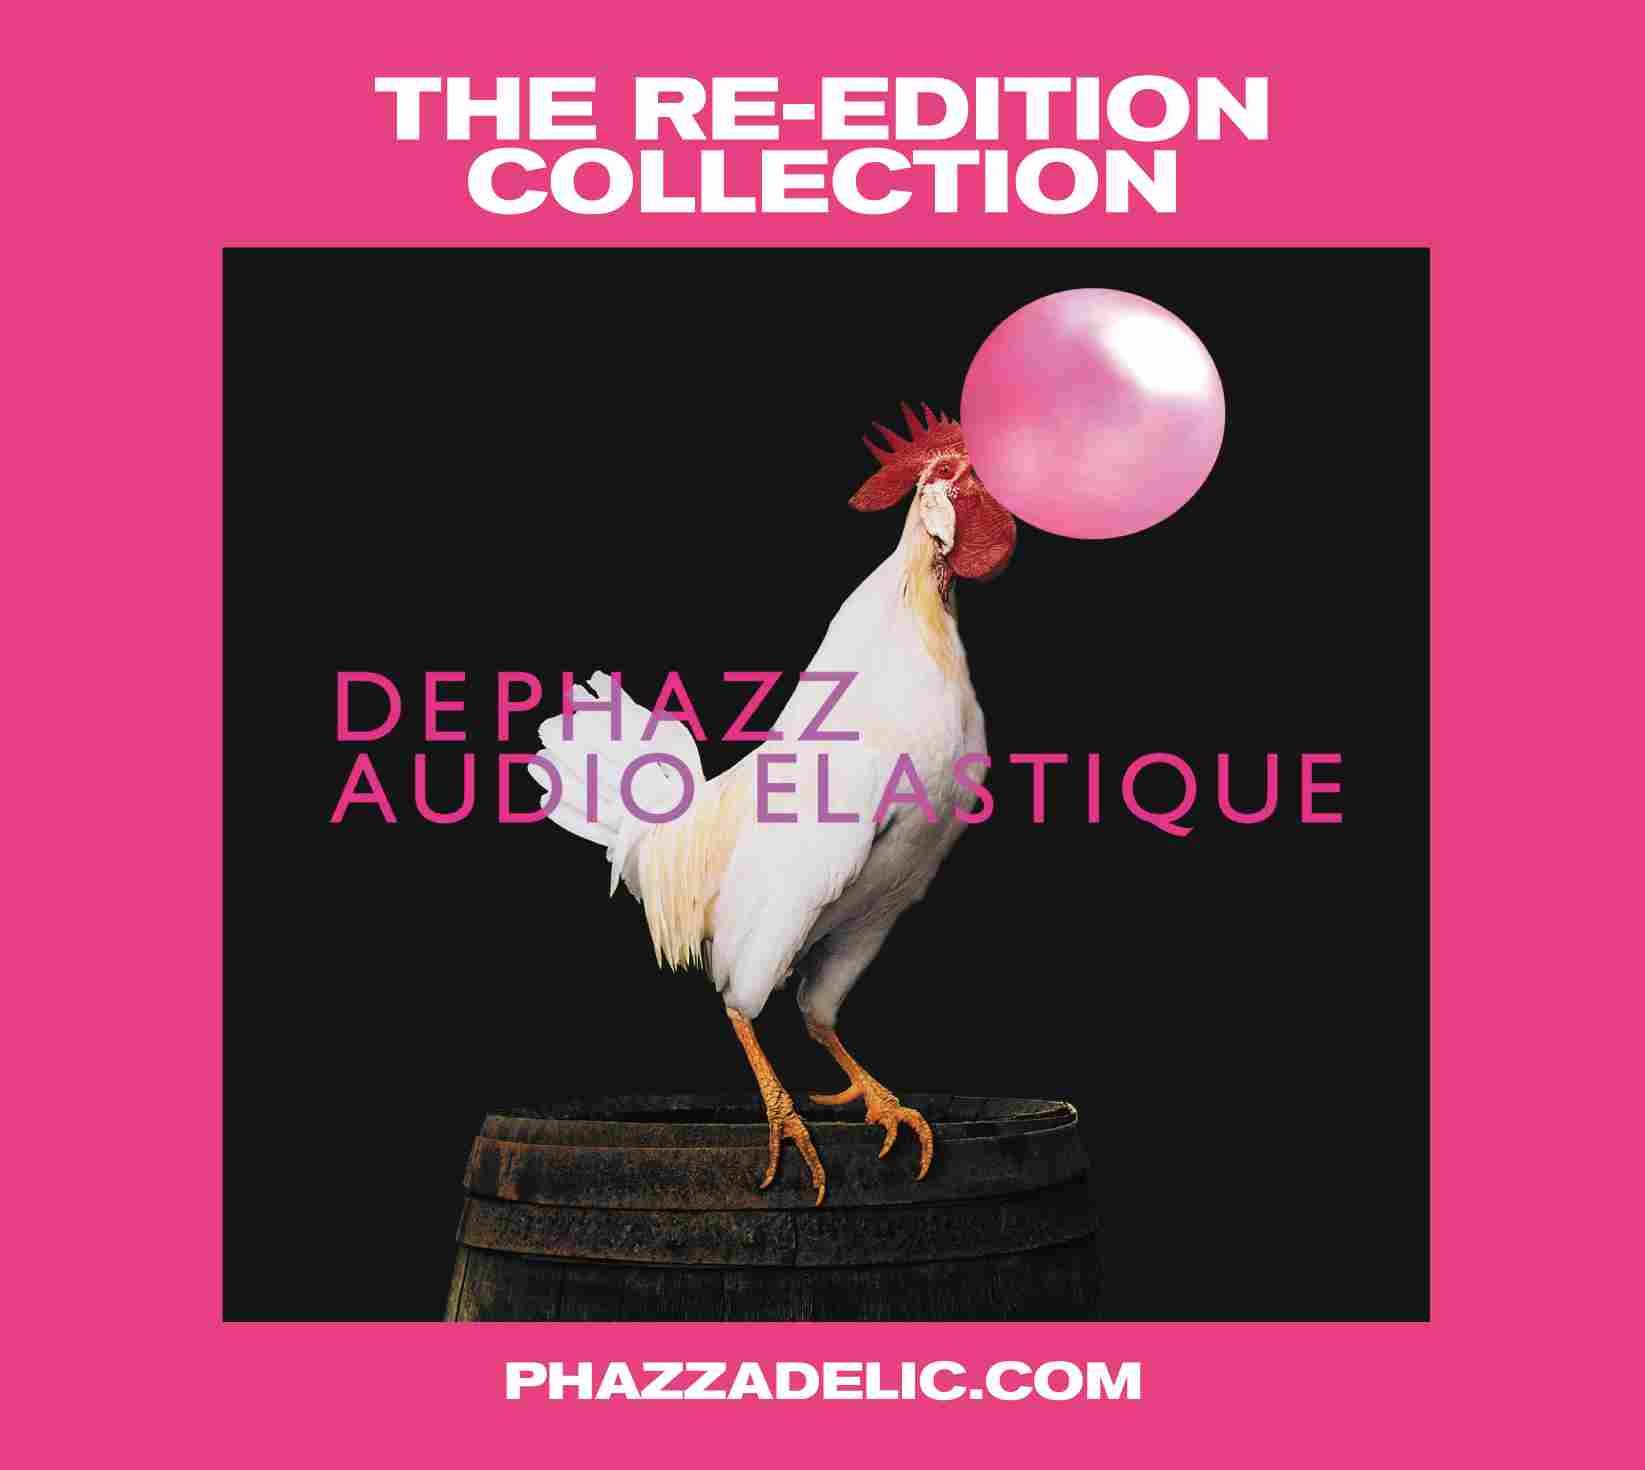 De-Phazz - Audio Elastique (Limited Edition)